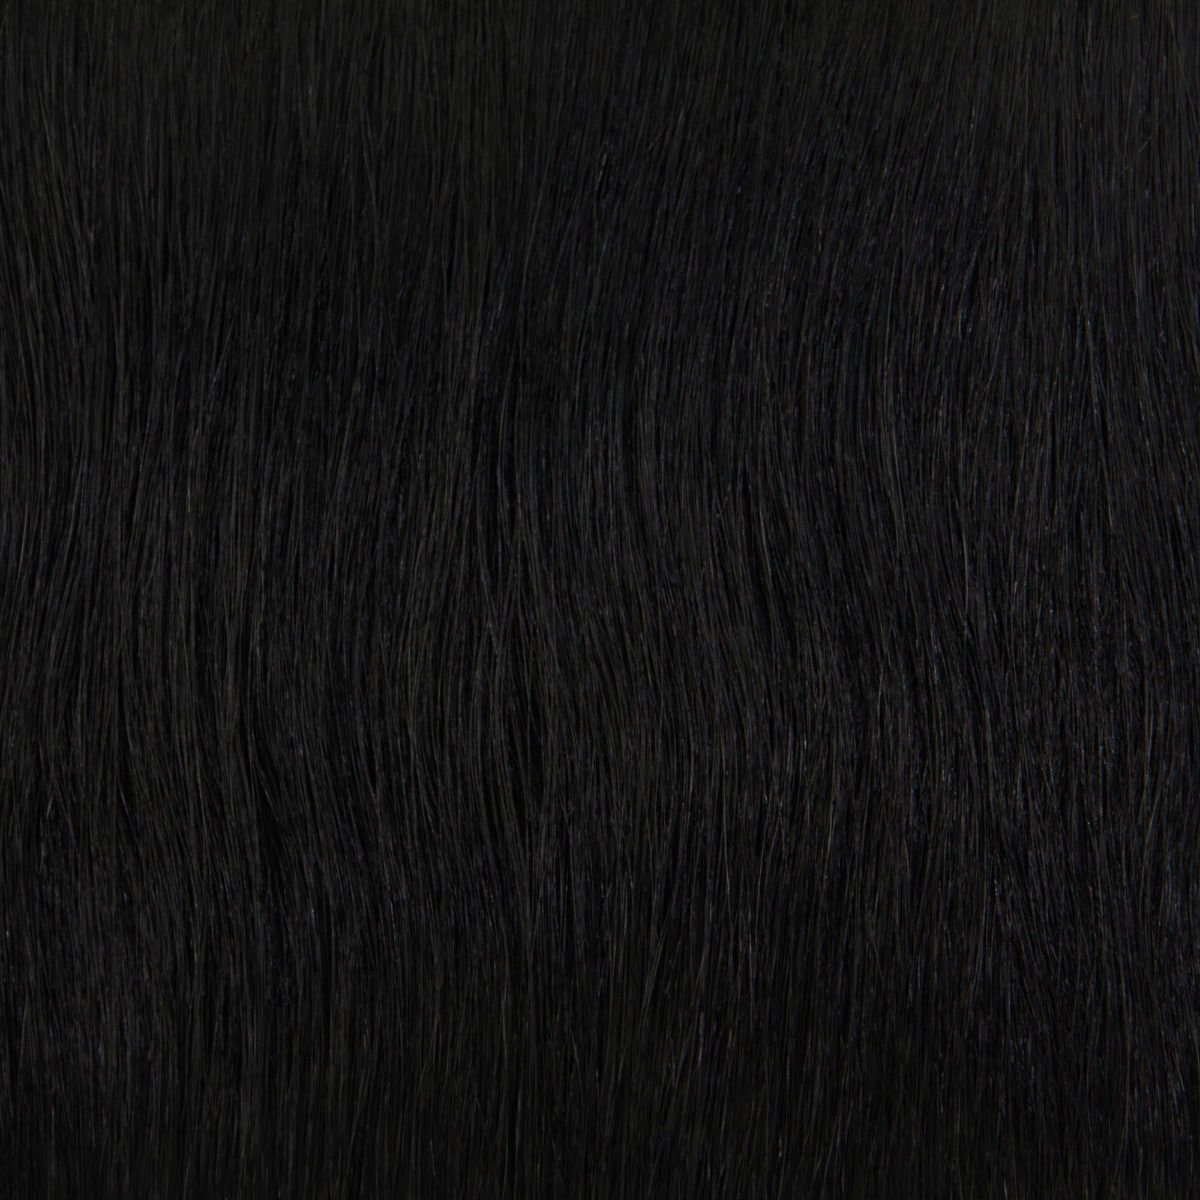 Balmain Hair Professional - Double Hair Extensions Human Hair - 1 - Zwart